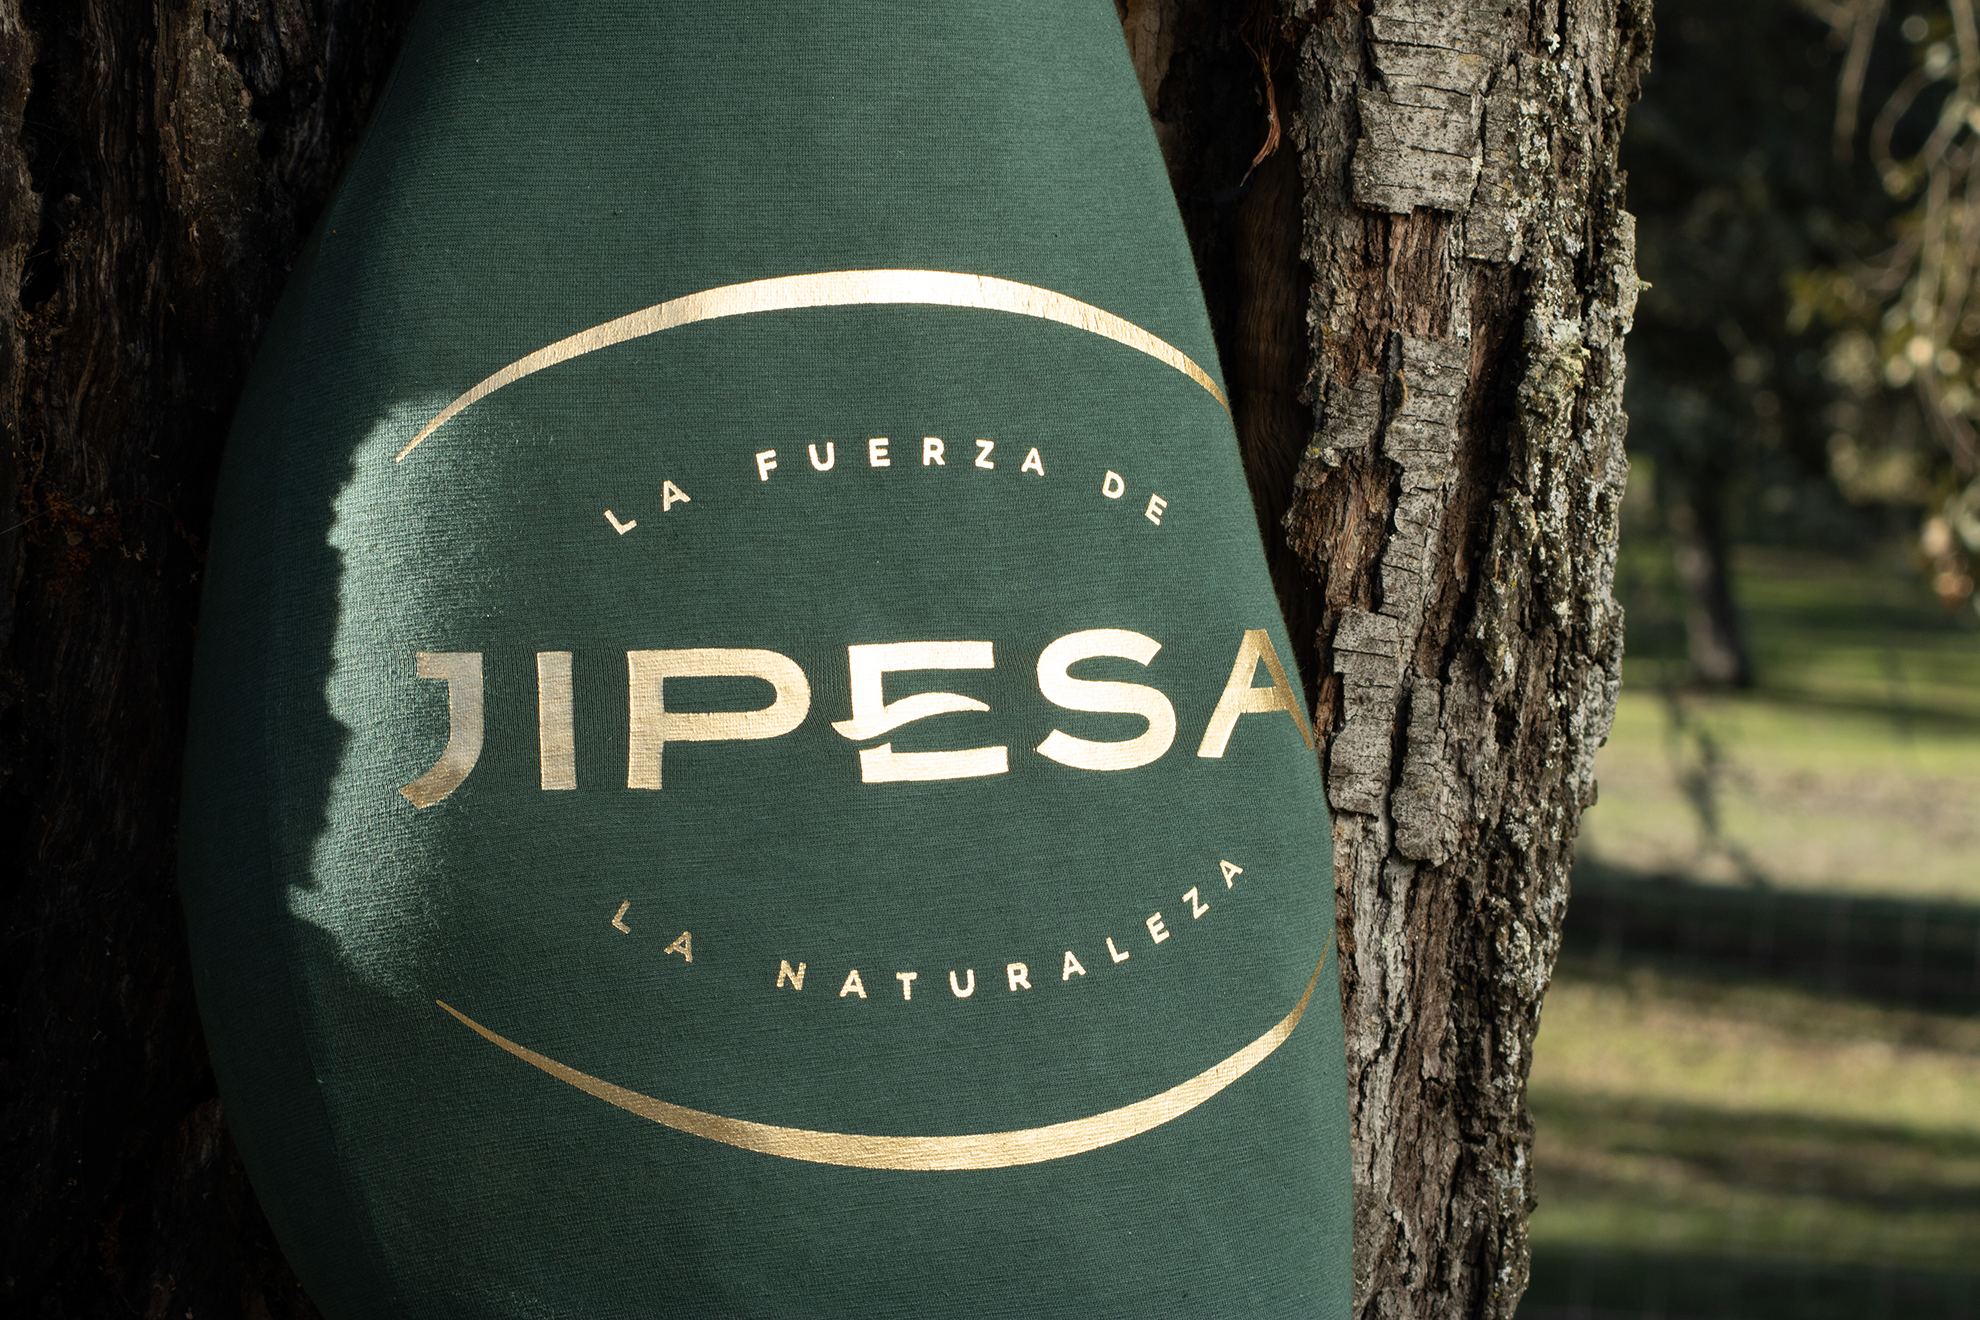 Jipesa packaging sostenible para jamón